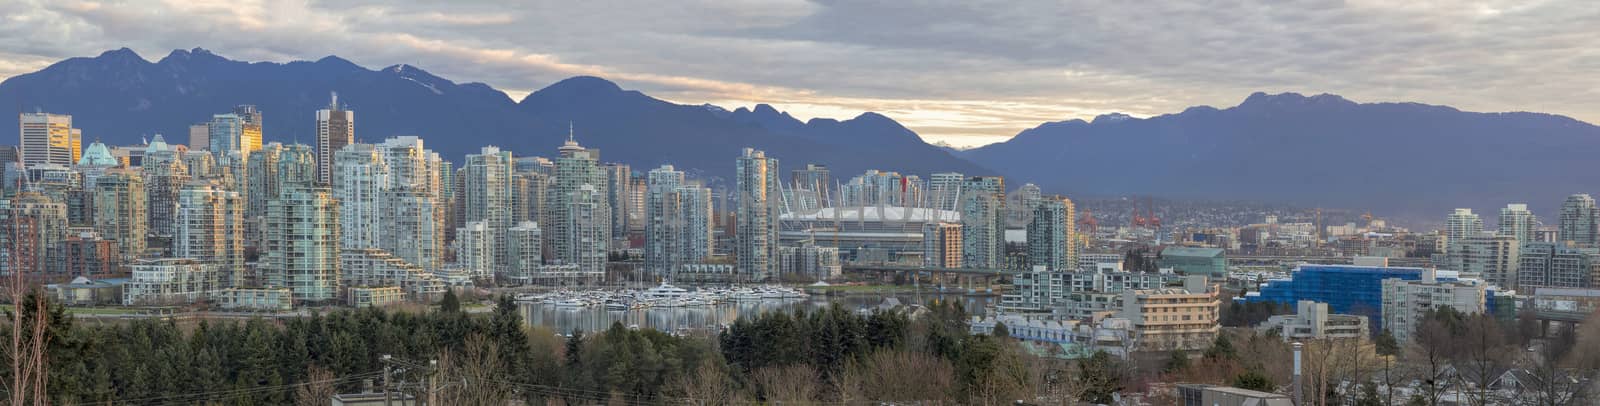 Vancouver BC Skyline Along False Creek Panorama by jpldesigns